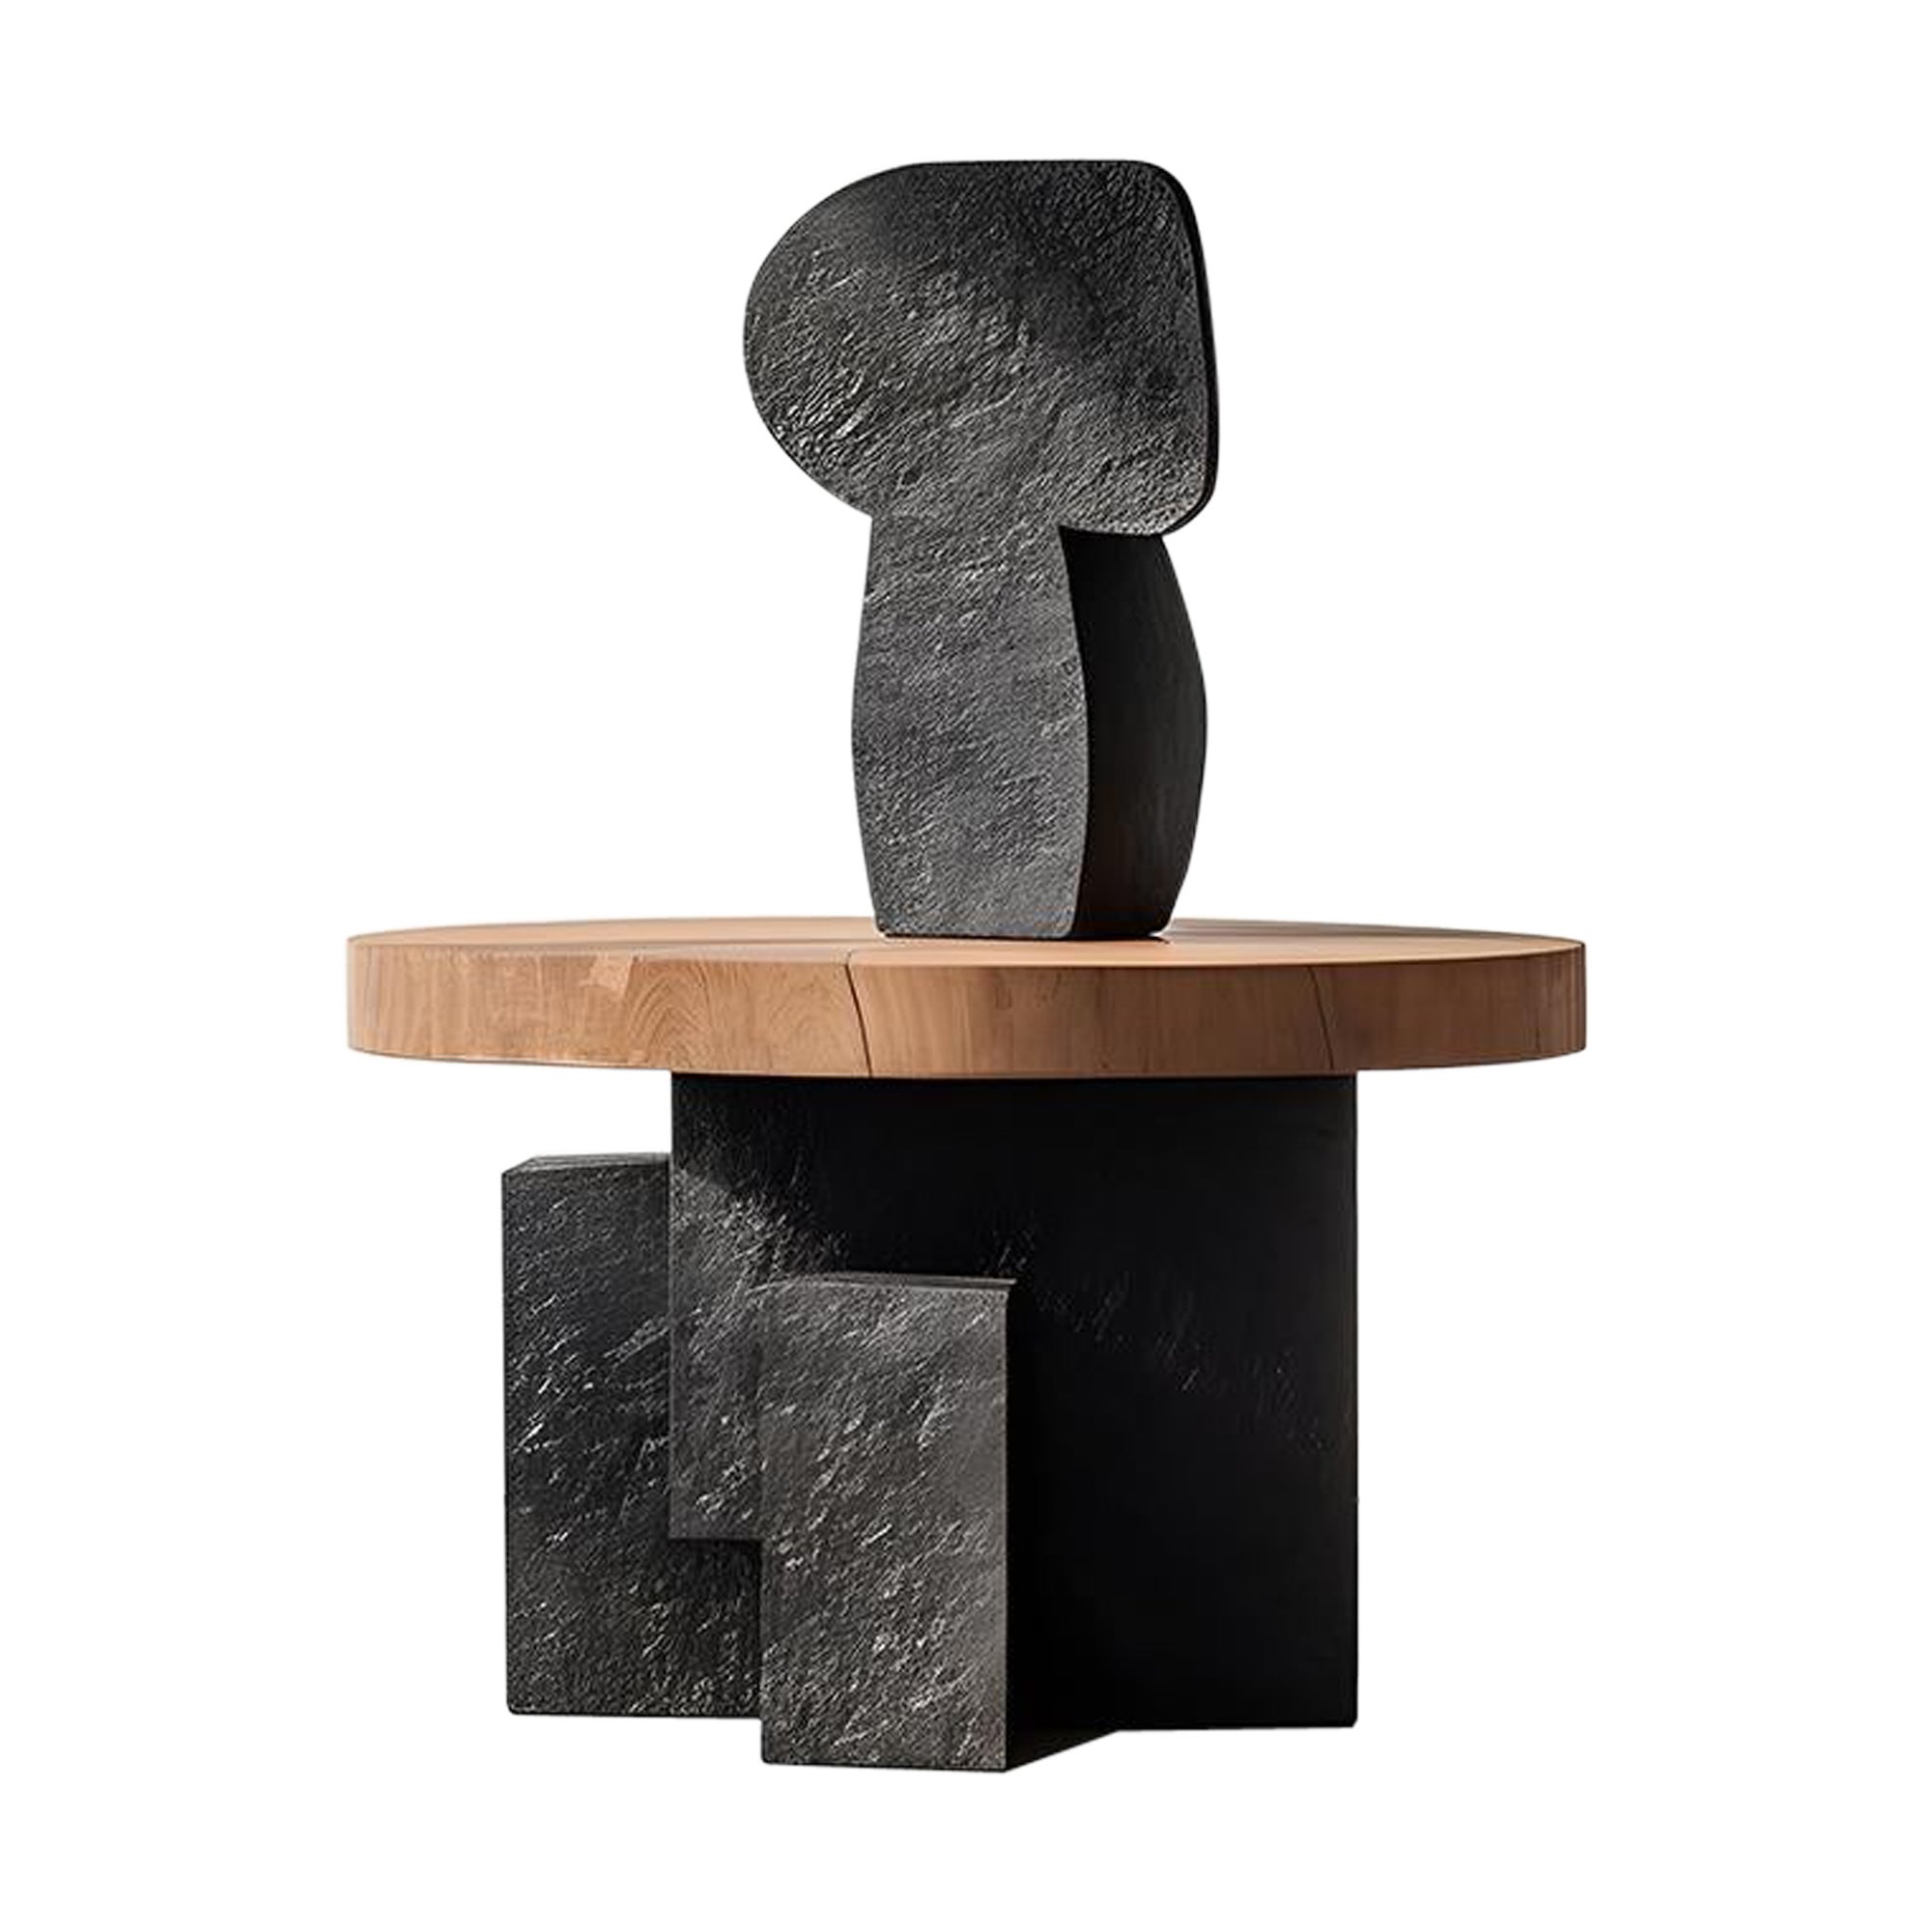 Artful Oak Unseen Force #41: Joel Escalona's Coffee Table, Sculptural Design For Sale